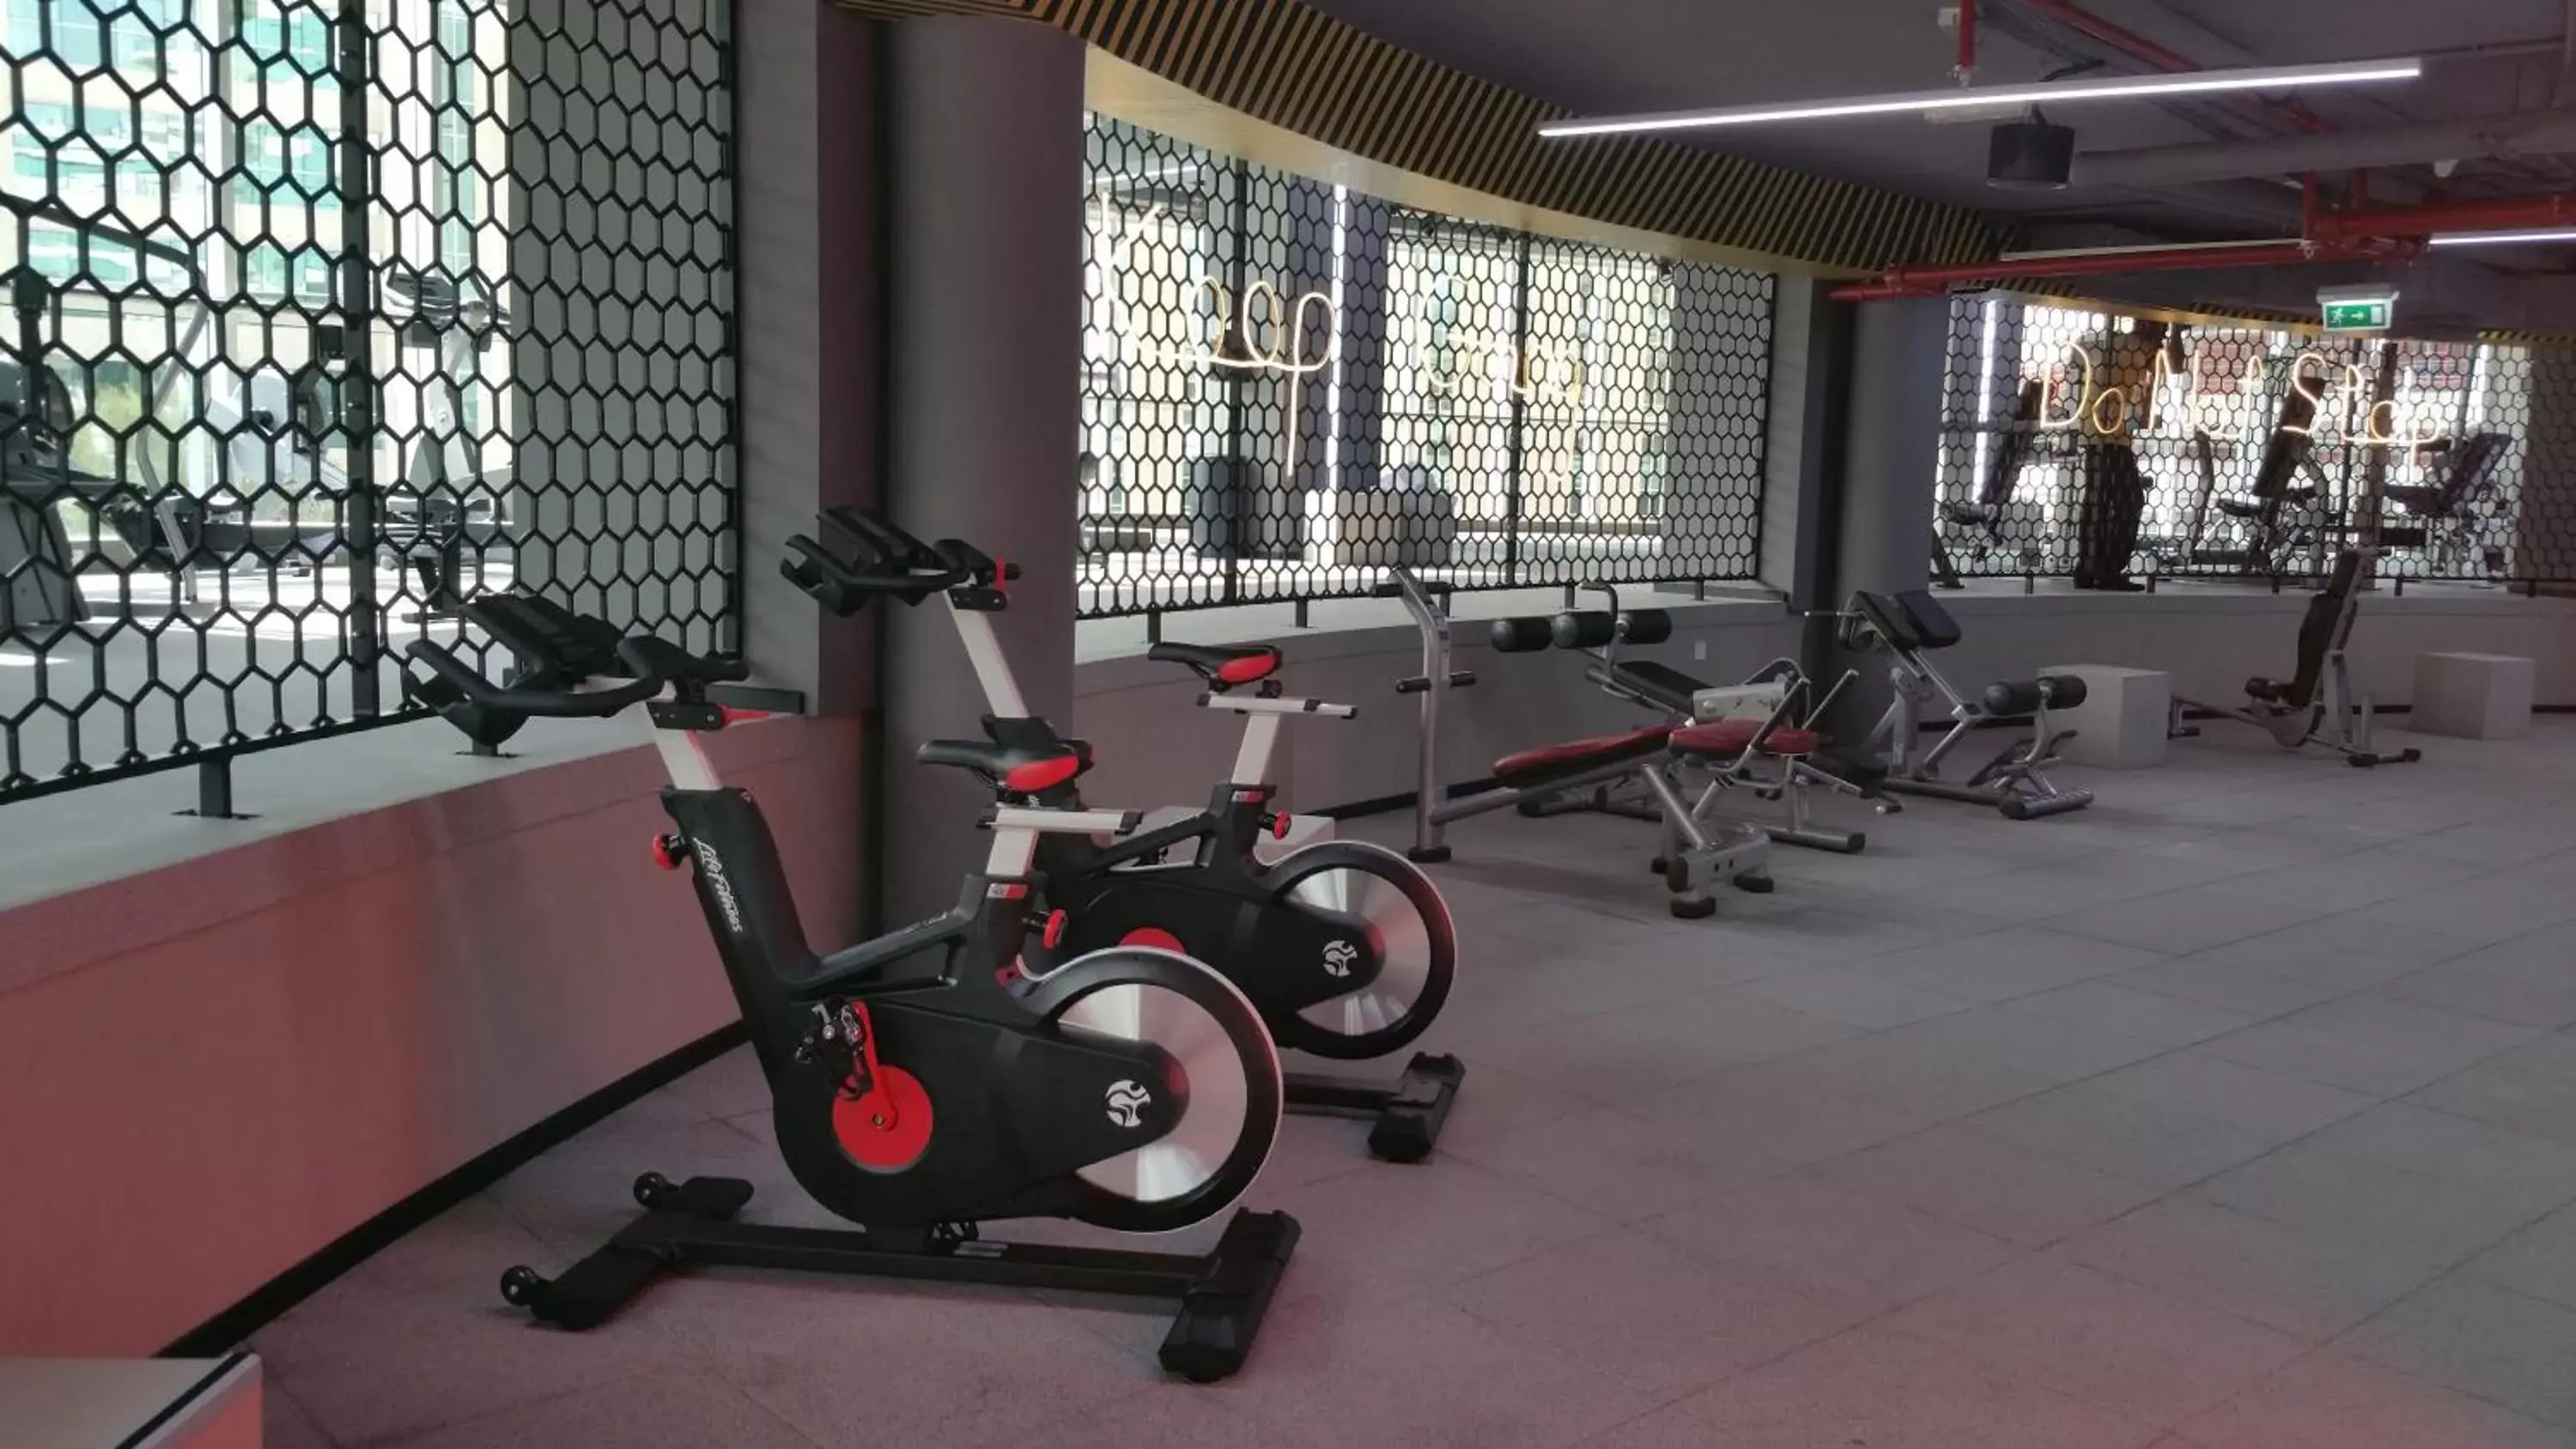 Fitness centre/facilities, Fitness Center/Facilities in Millennium Airport Hotel Dubai